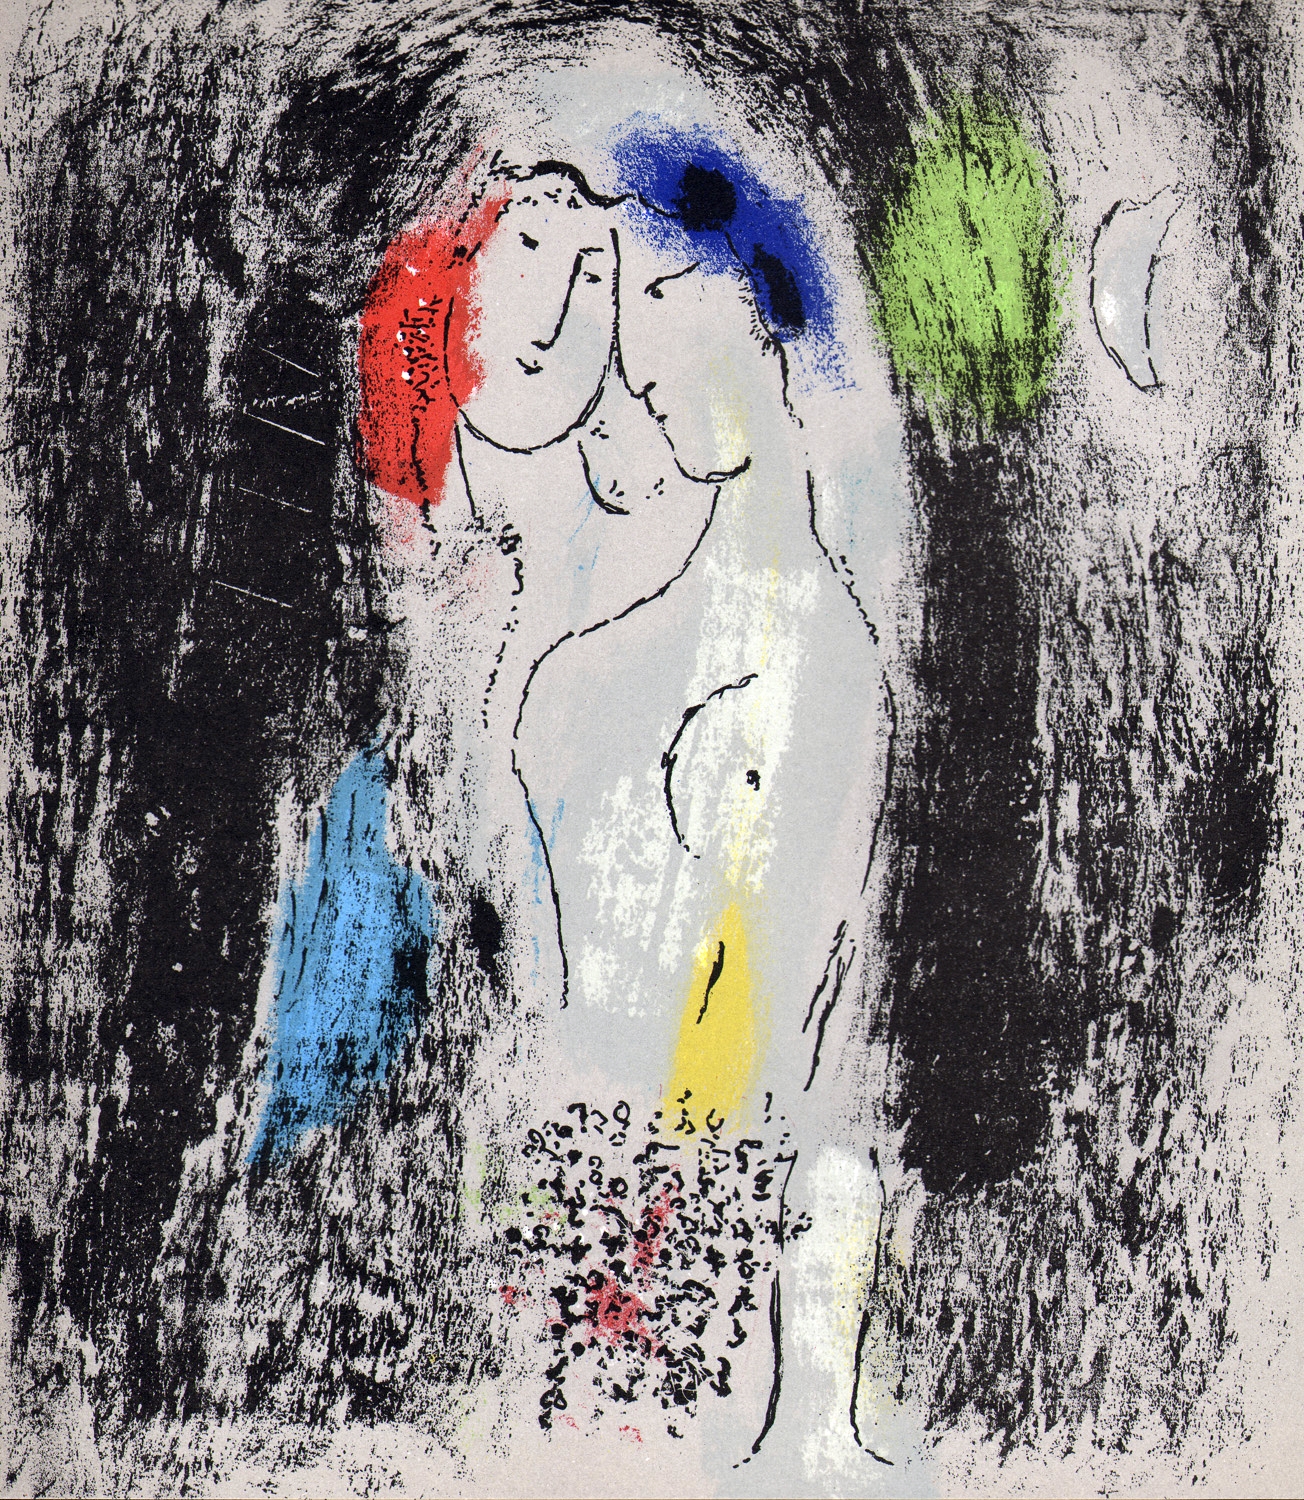 Marc+Chagall-1887-1985 (268).jpg